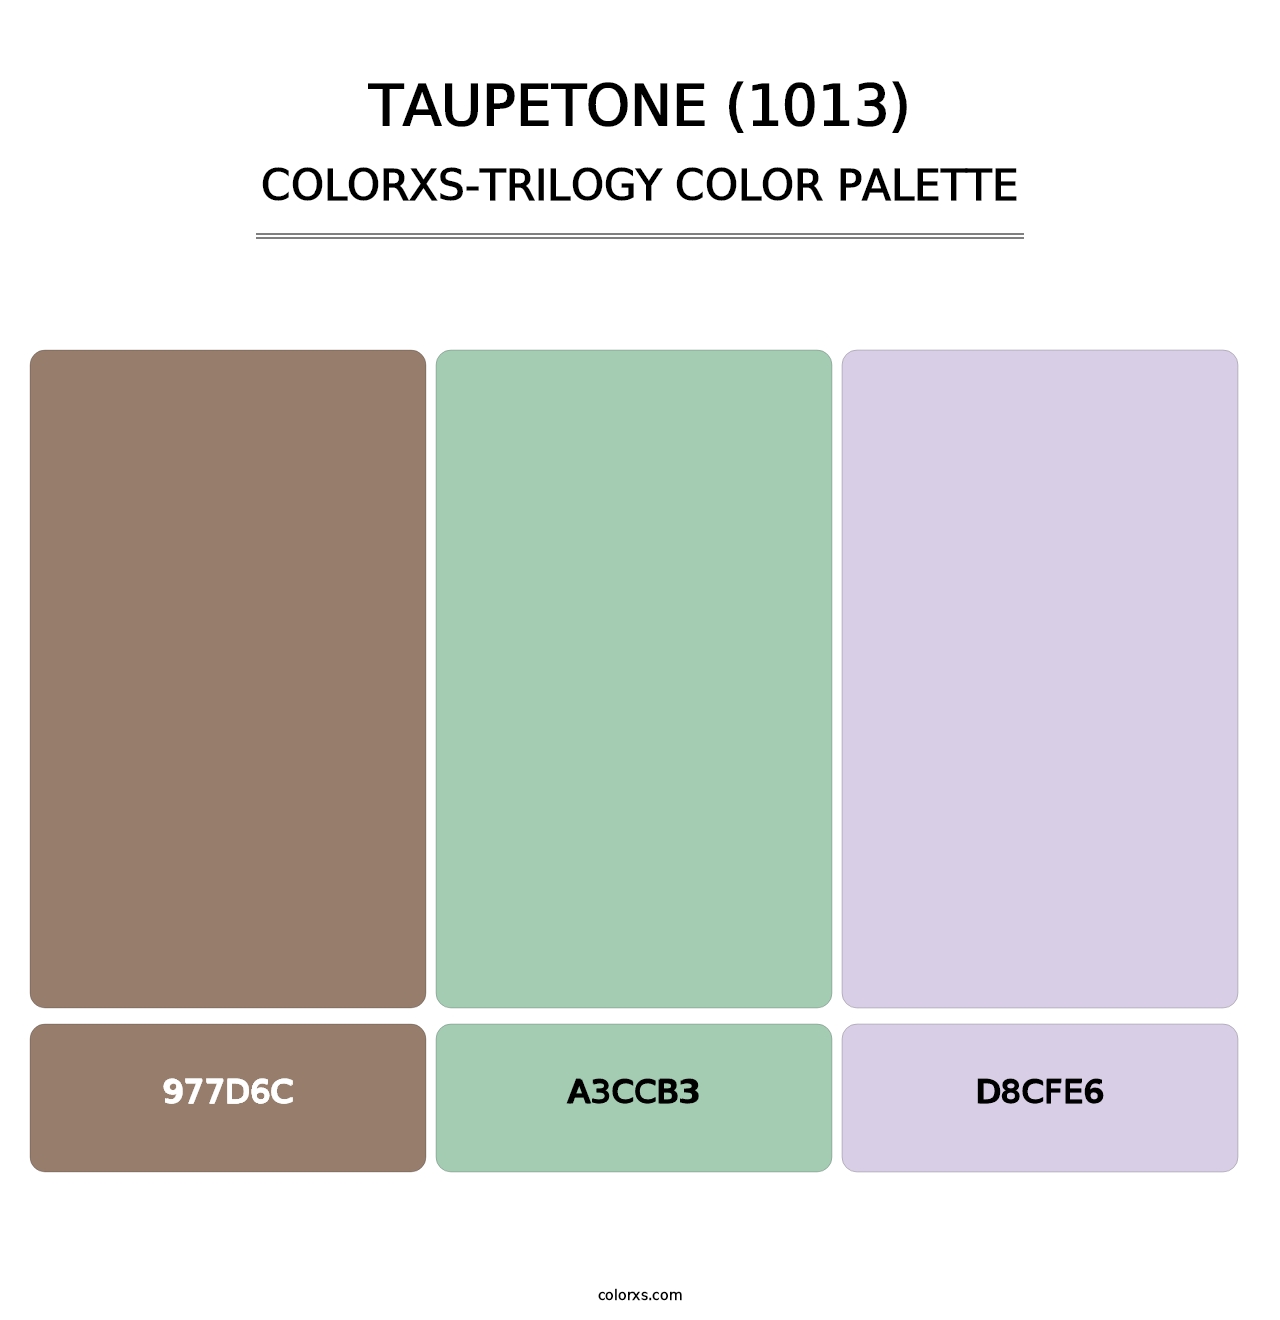 Taupetone (1013) - Colorxs Trilogy Palette